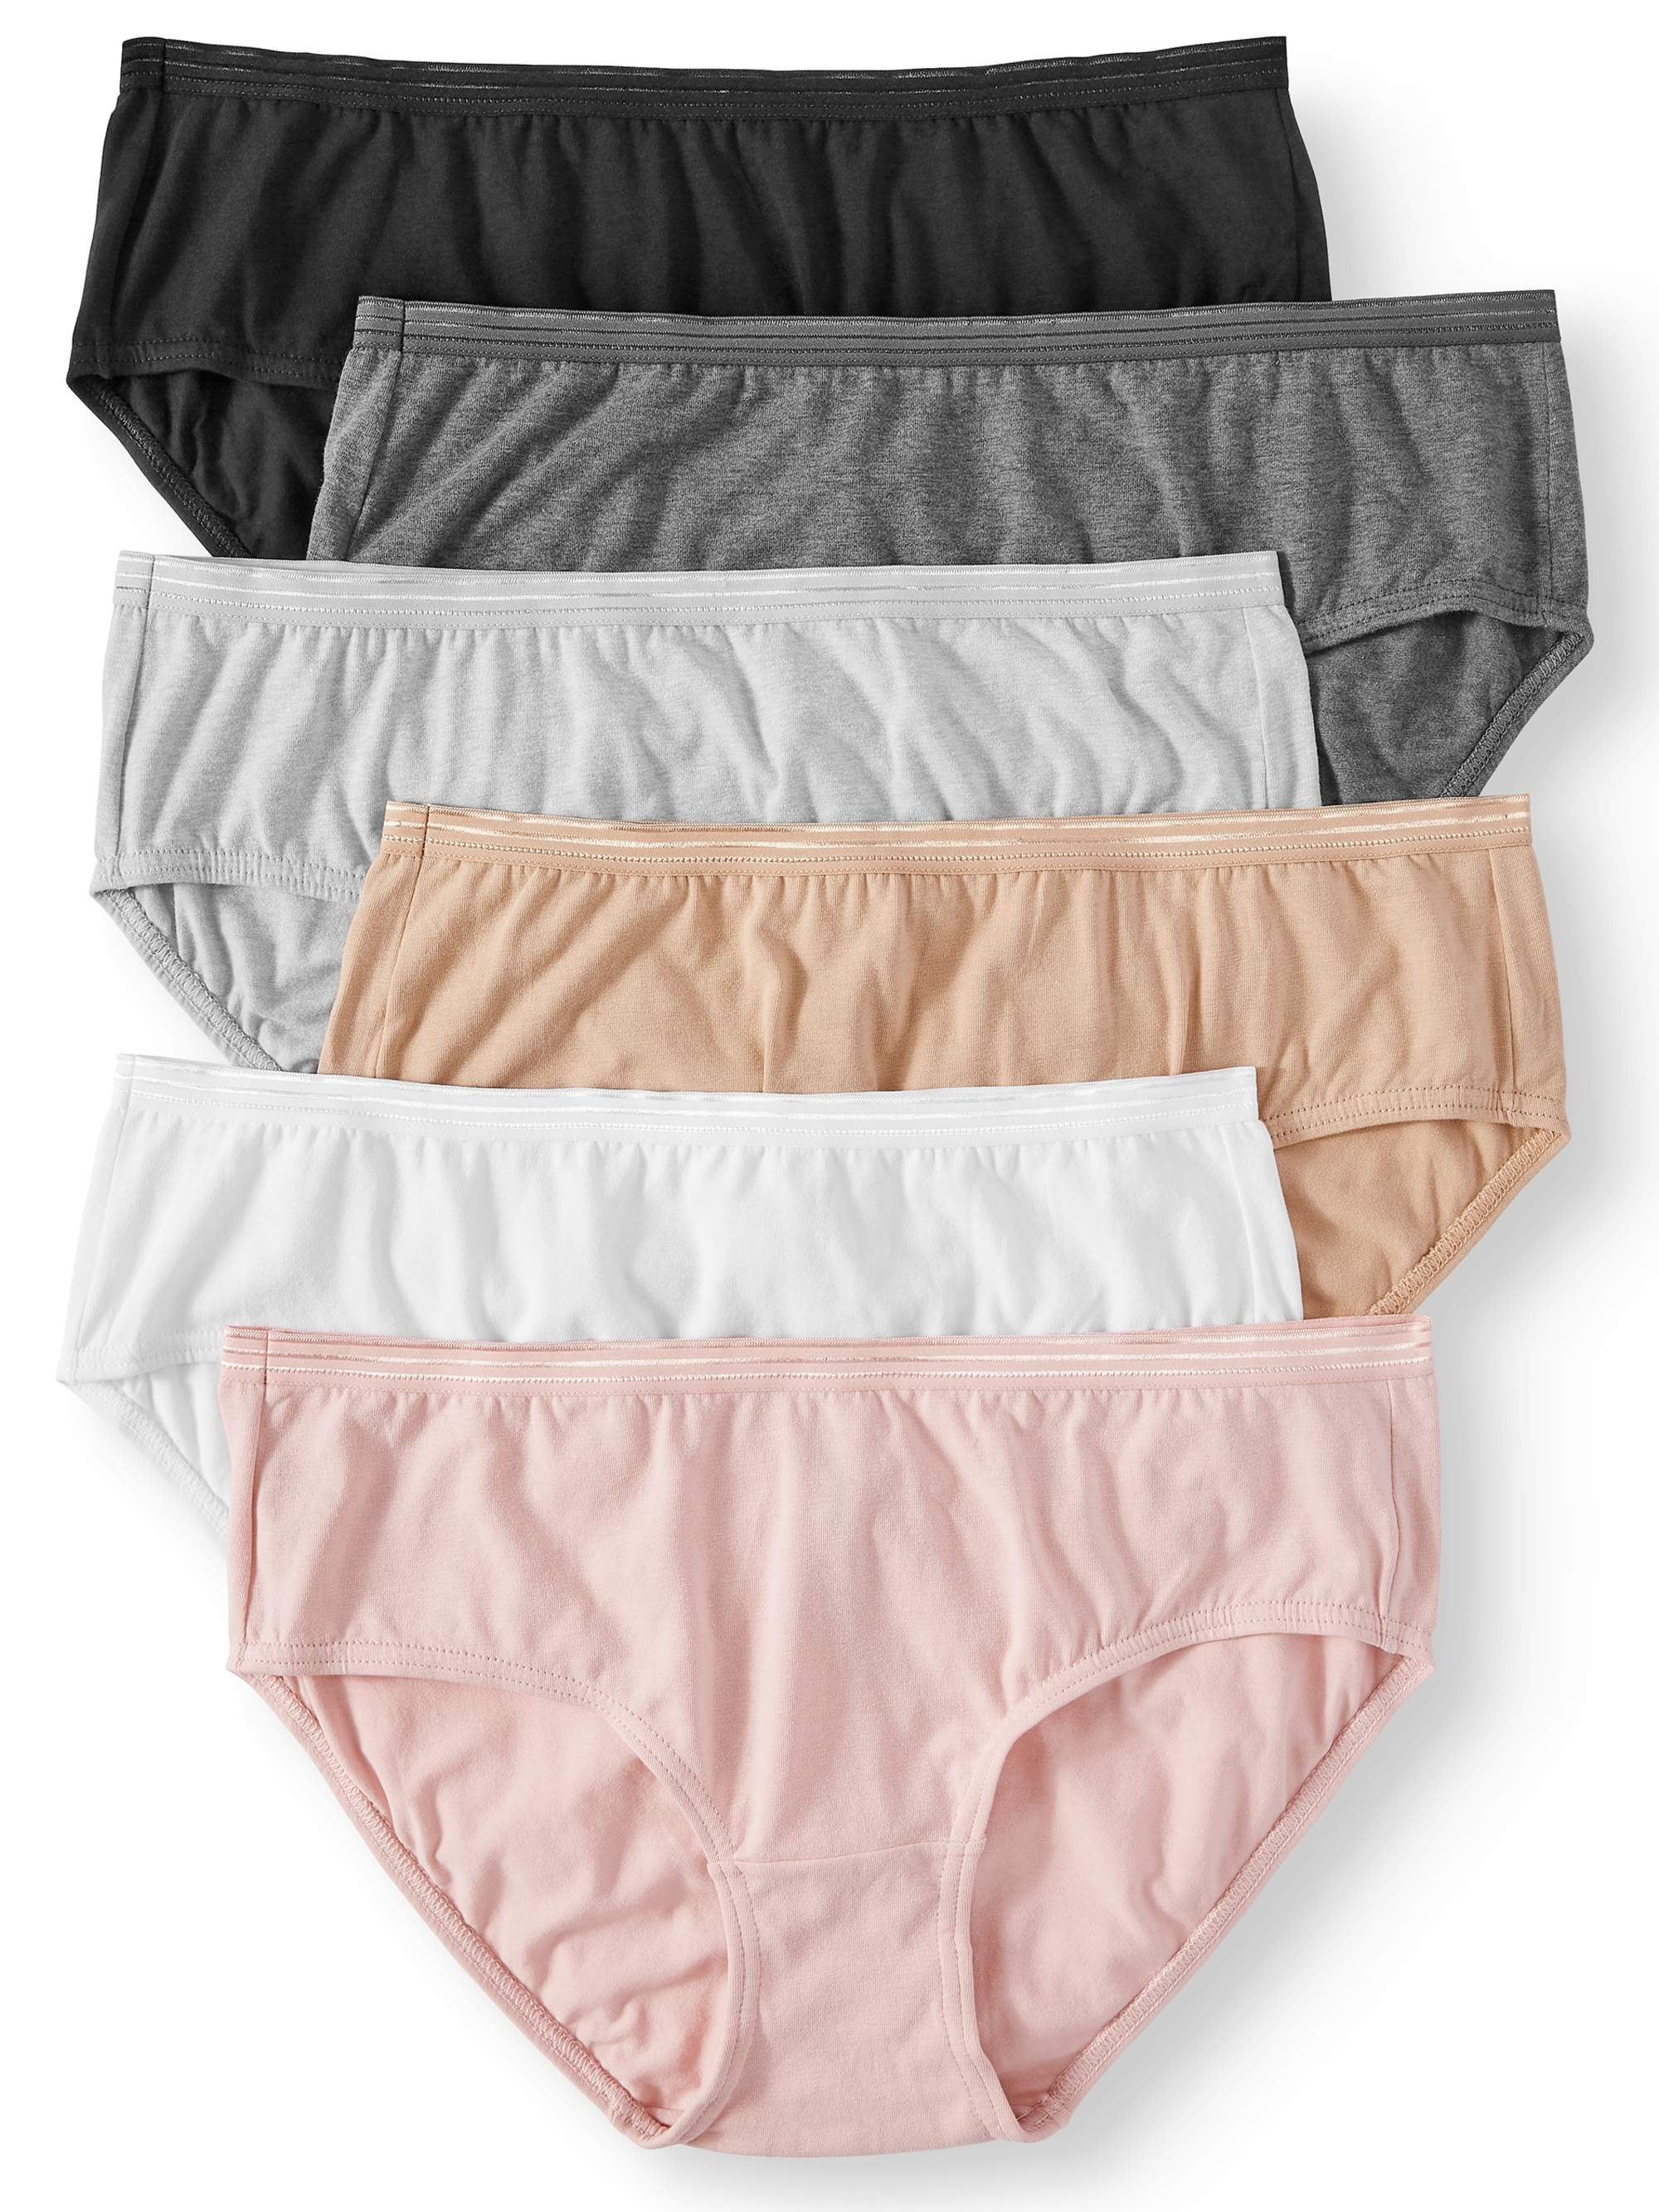 Women's Cotton Hipster Panties